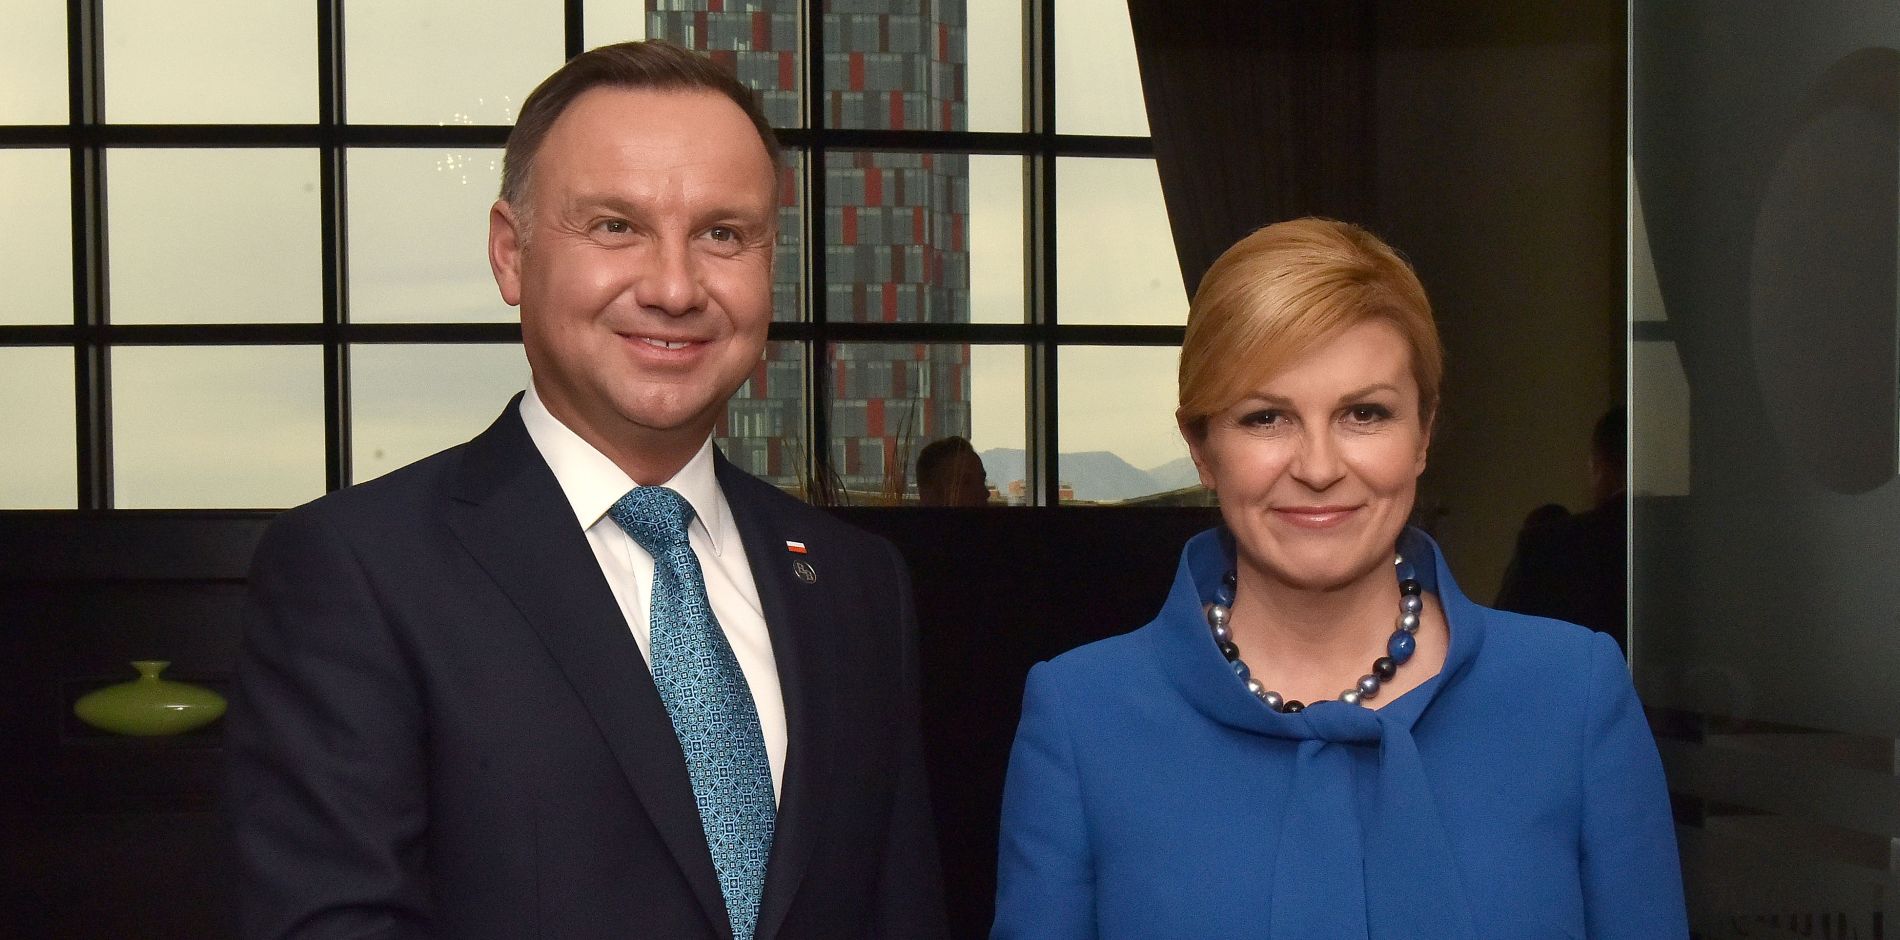 Tirana: Grabar-Kitarović i Duda potvrdili ‘izrazito dobre’ bilateralne odnose RH i Poljske